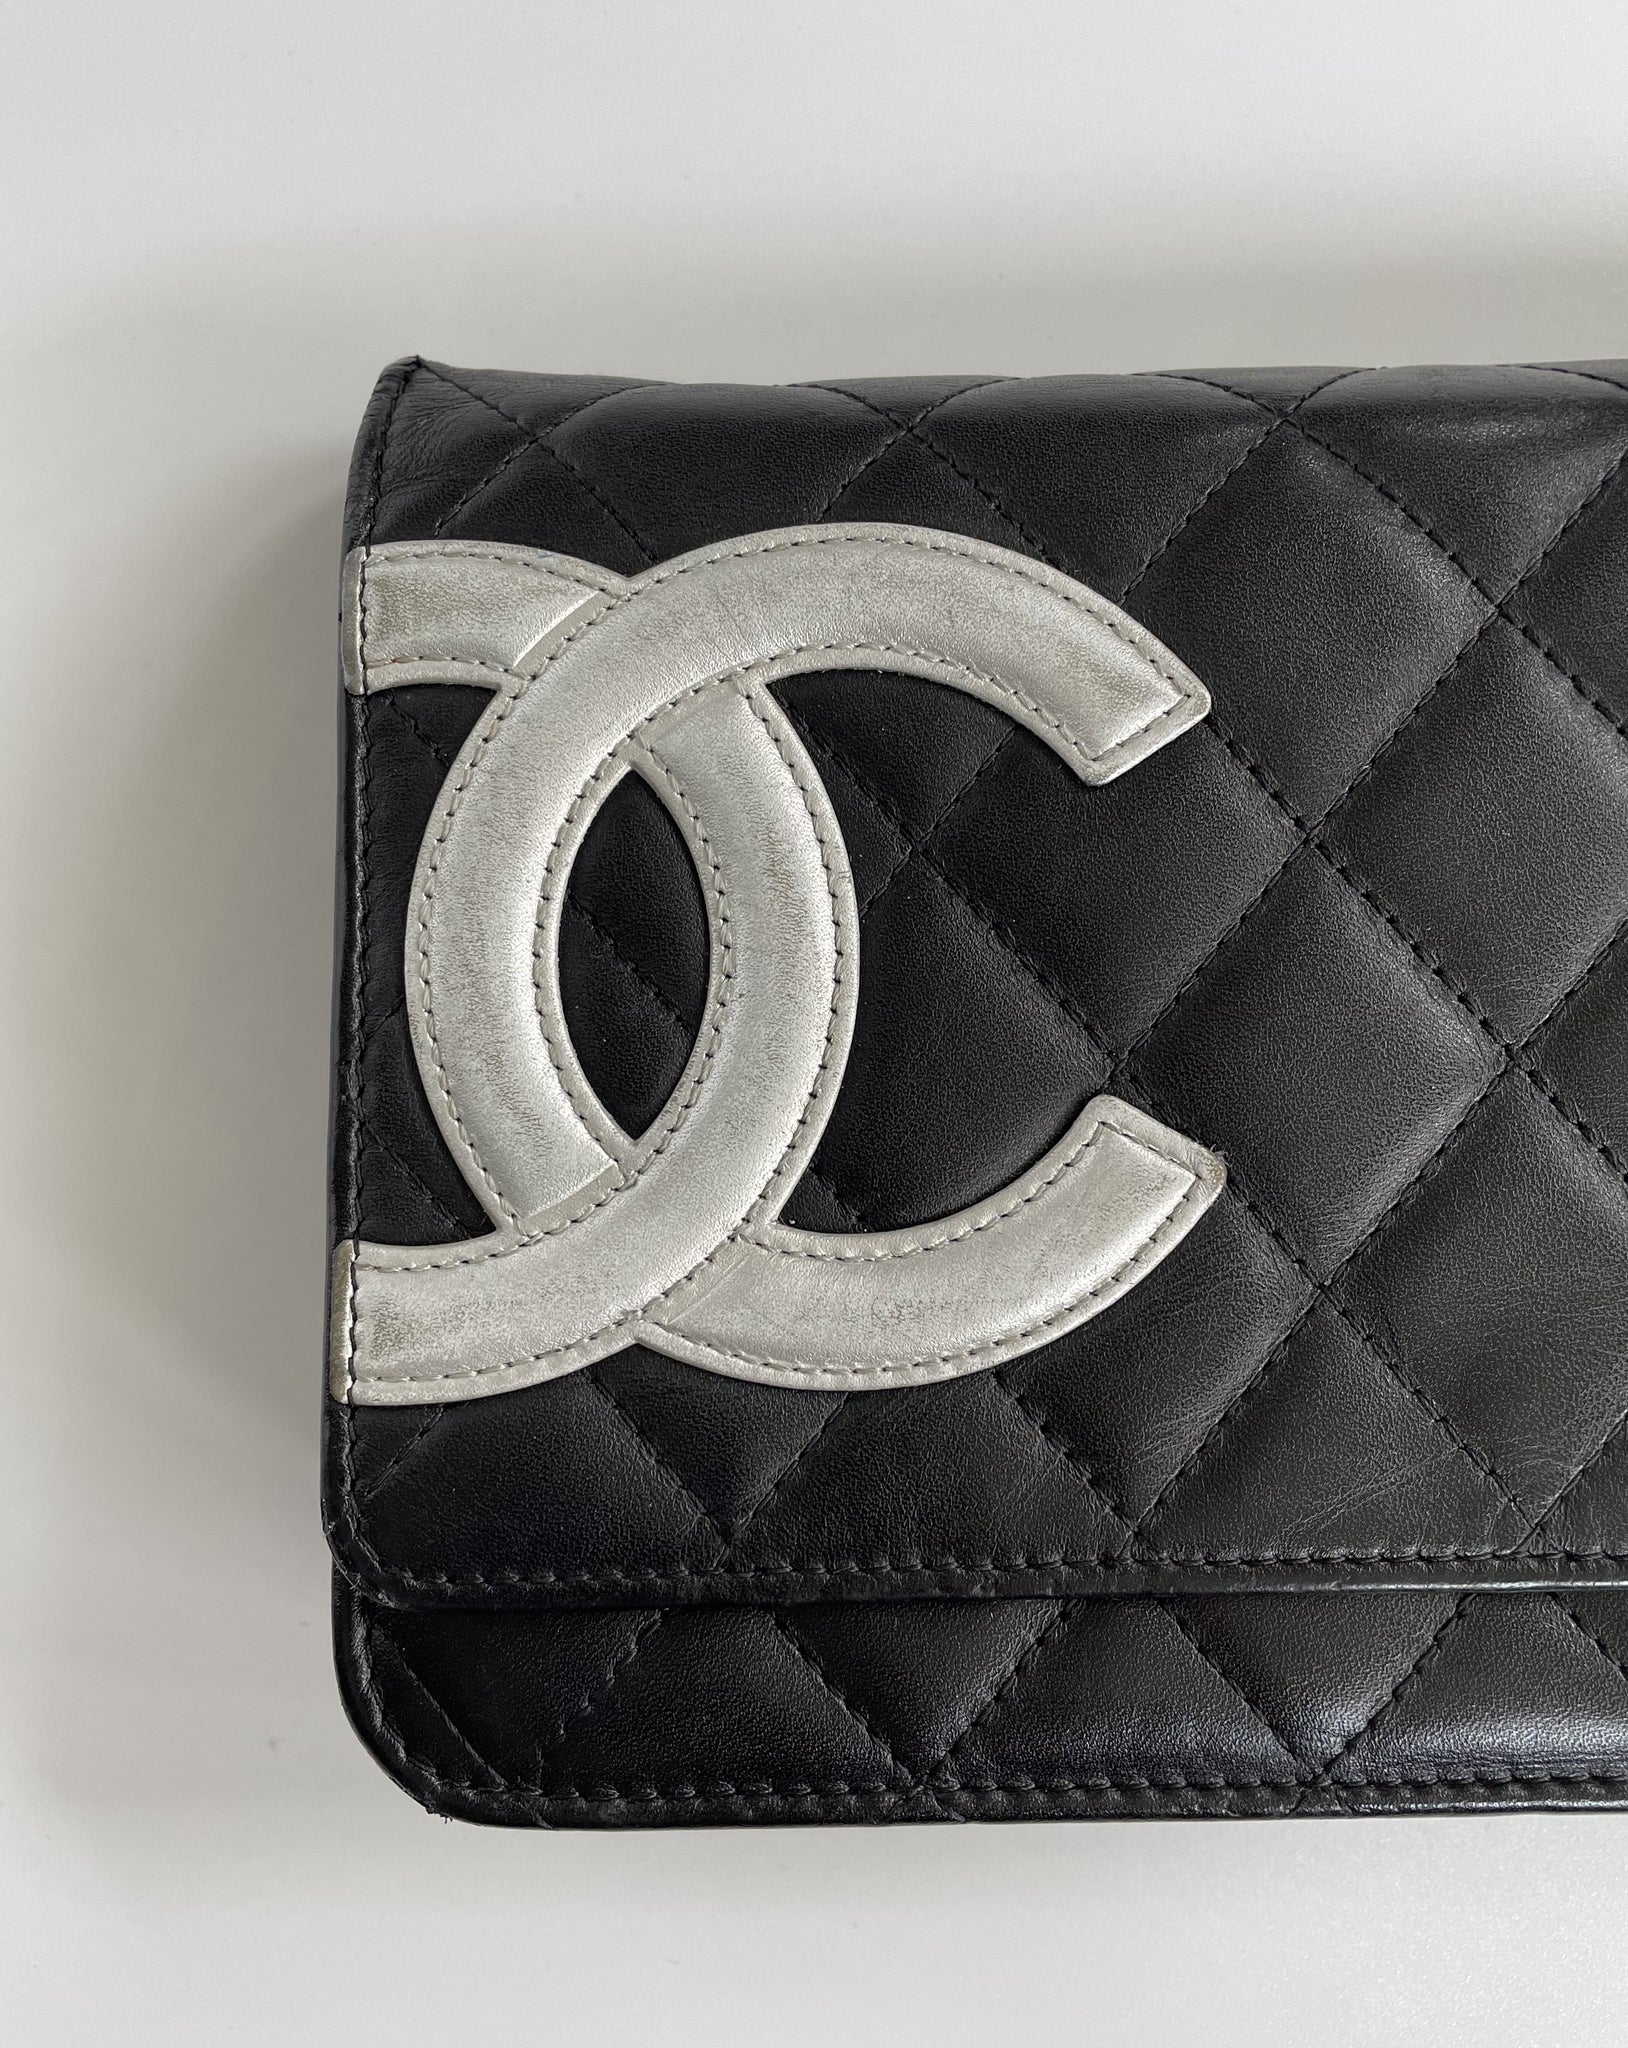 Chanel Vintage Ligne Cambon Wallet